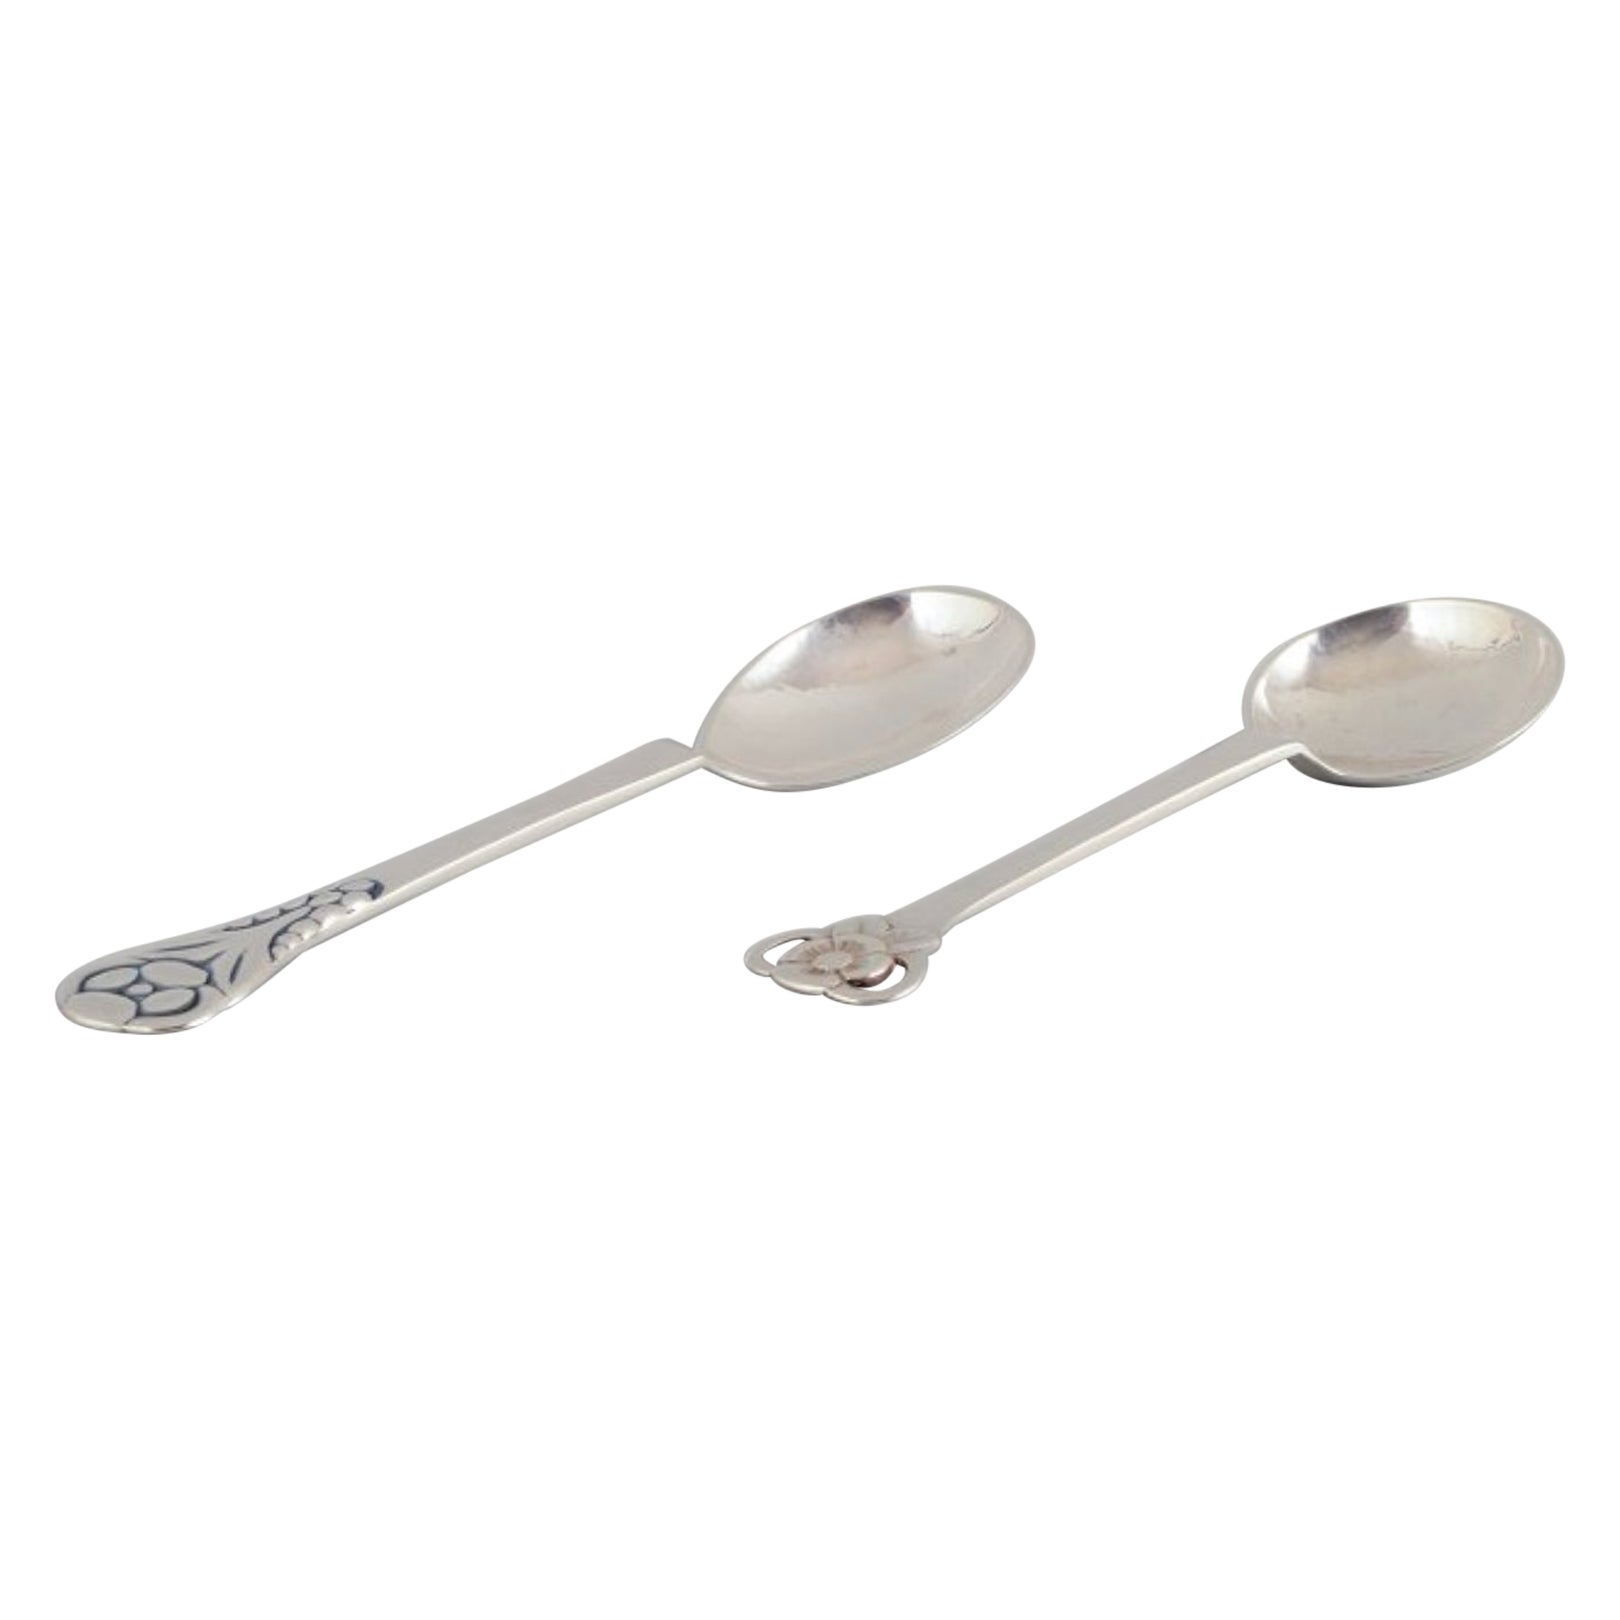 Evald Nielsen, Danish Silversmith. Two Beautiful Large Art Nouveau Sugar Spoons For Sale